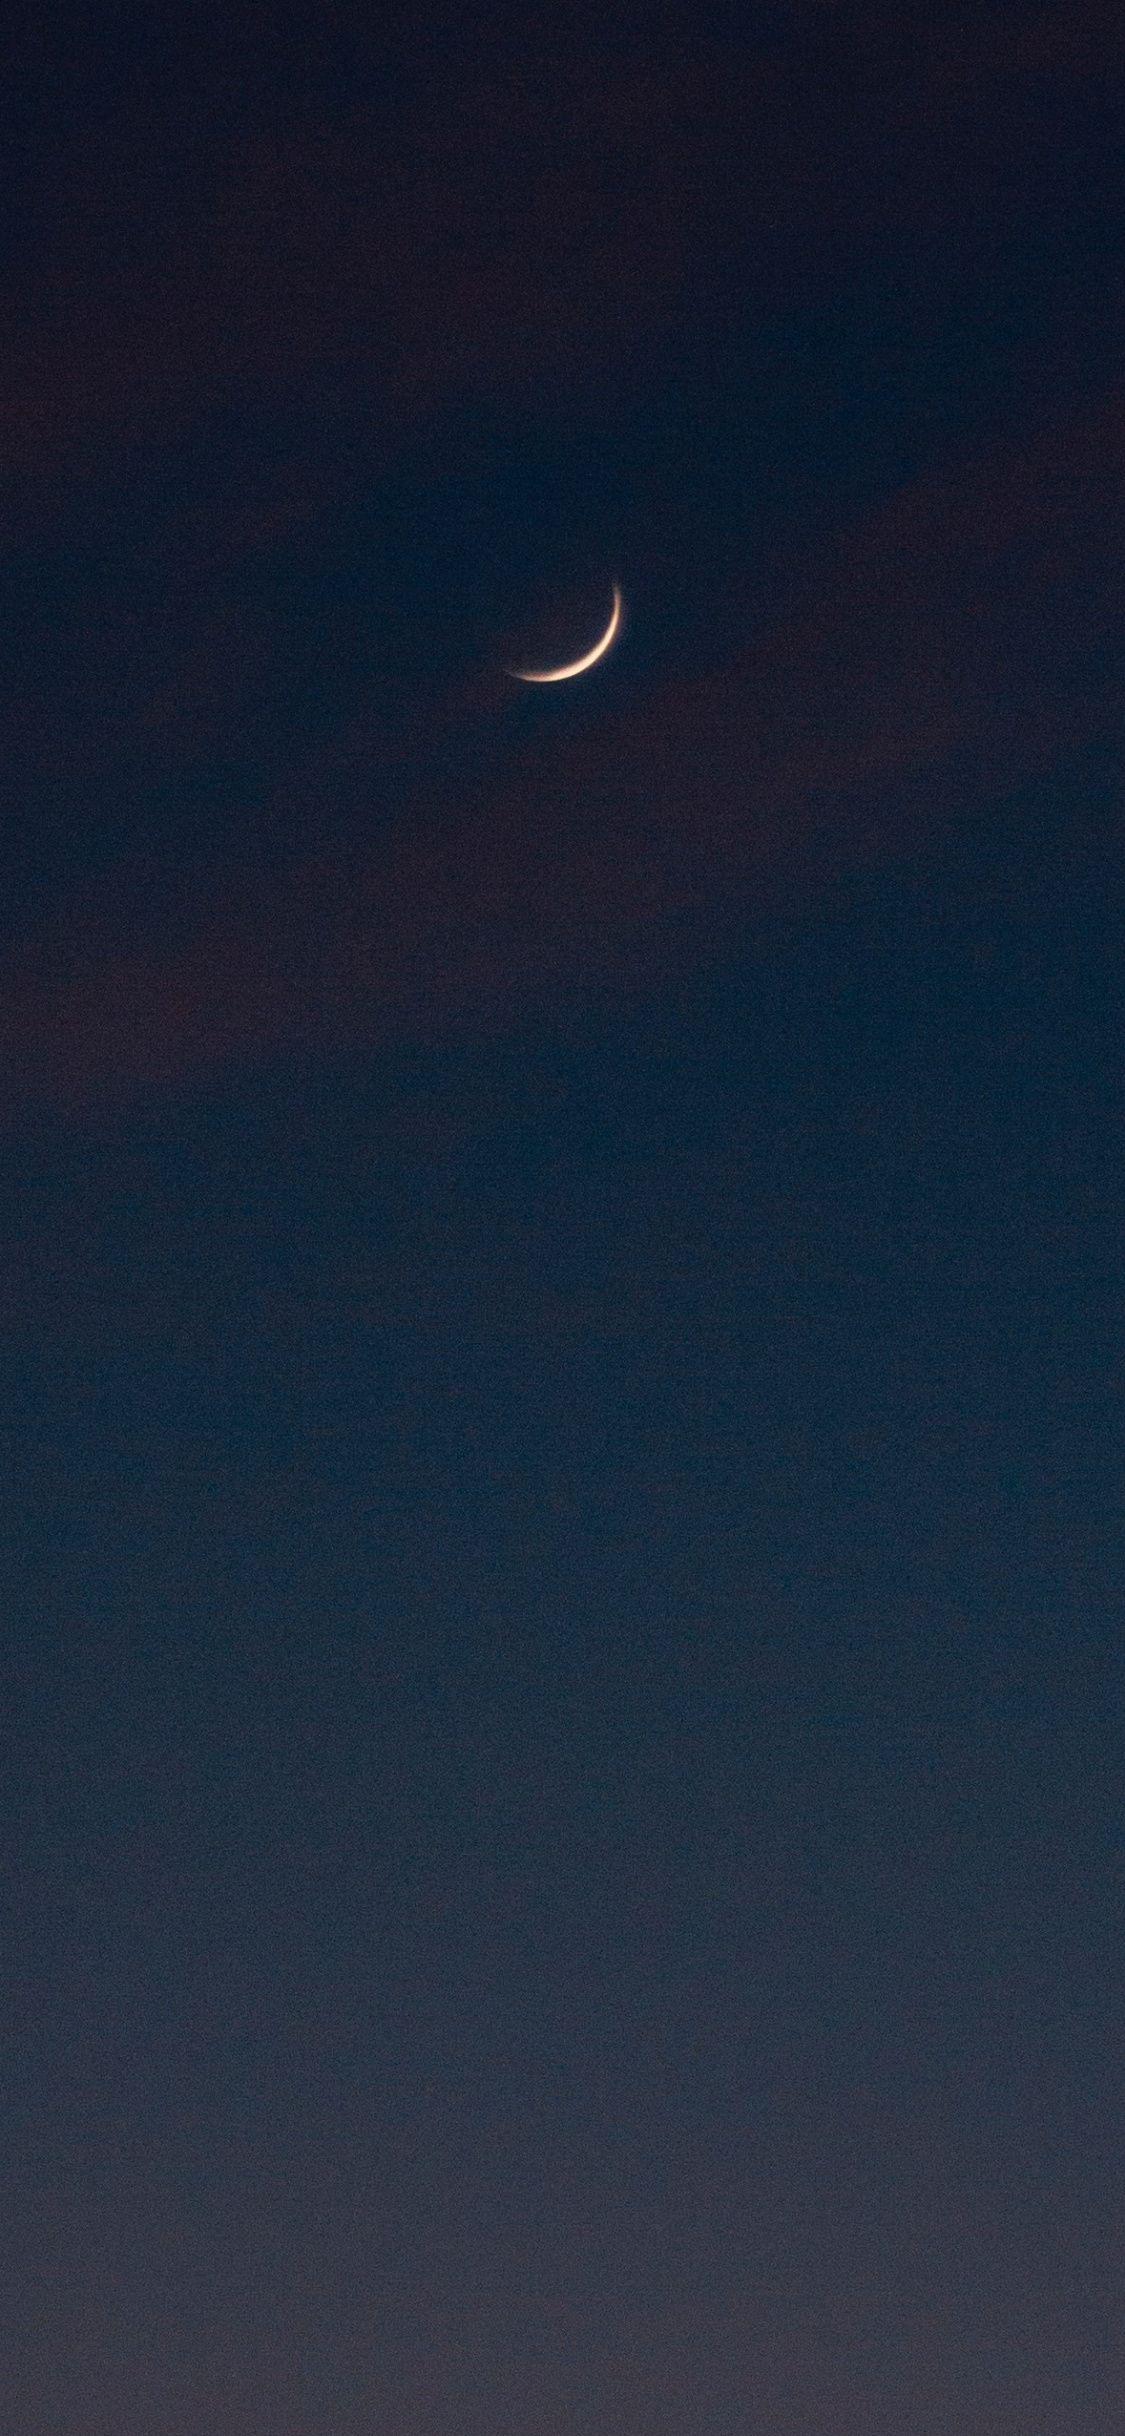 Night, clean sky, moon, 1125x2436 wallpaper. Dark wallpaper